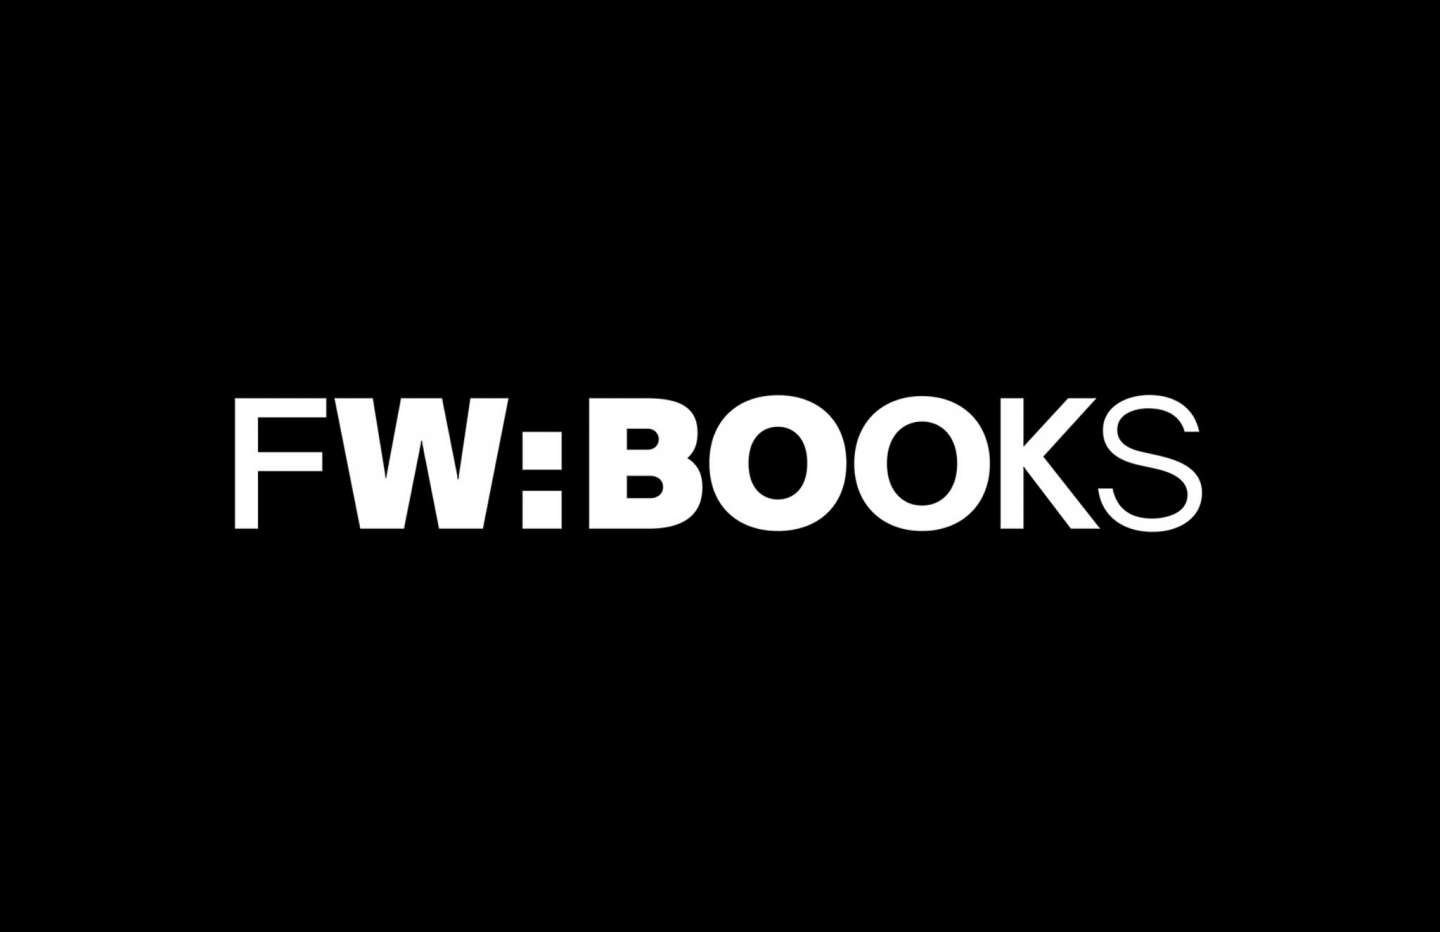 FW:BOOKS—Brand Identity